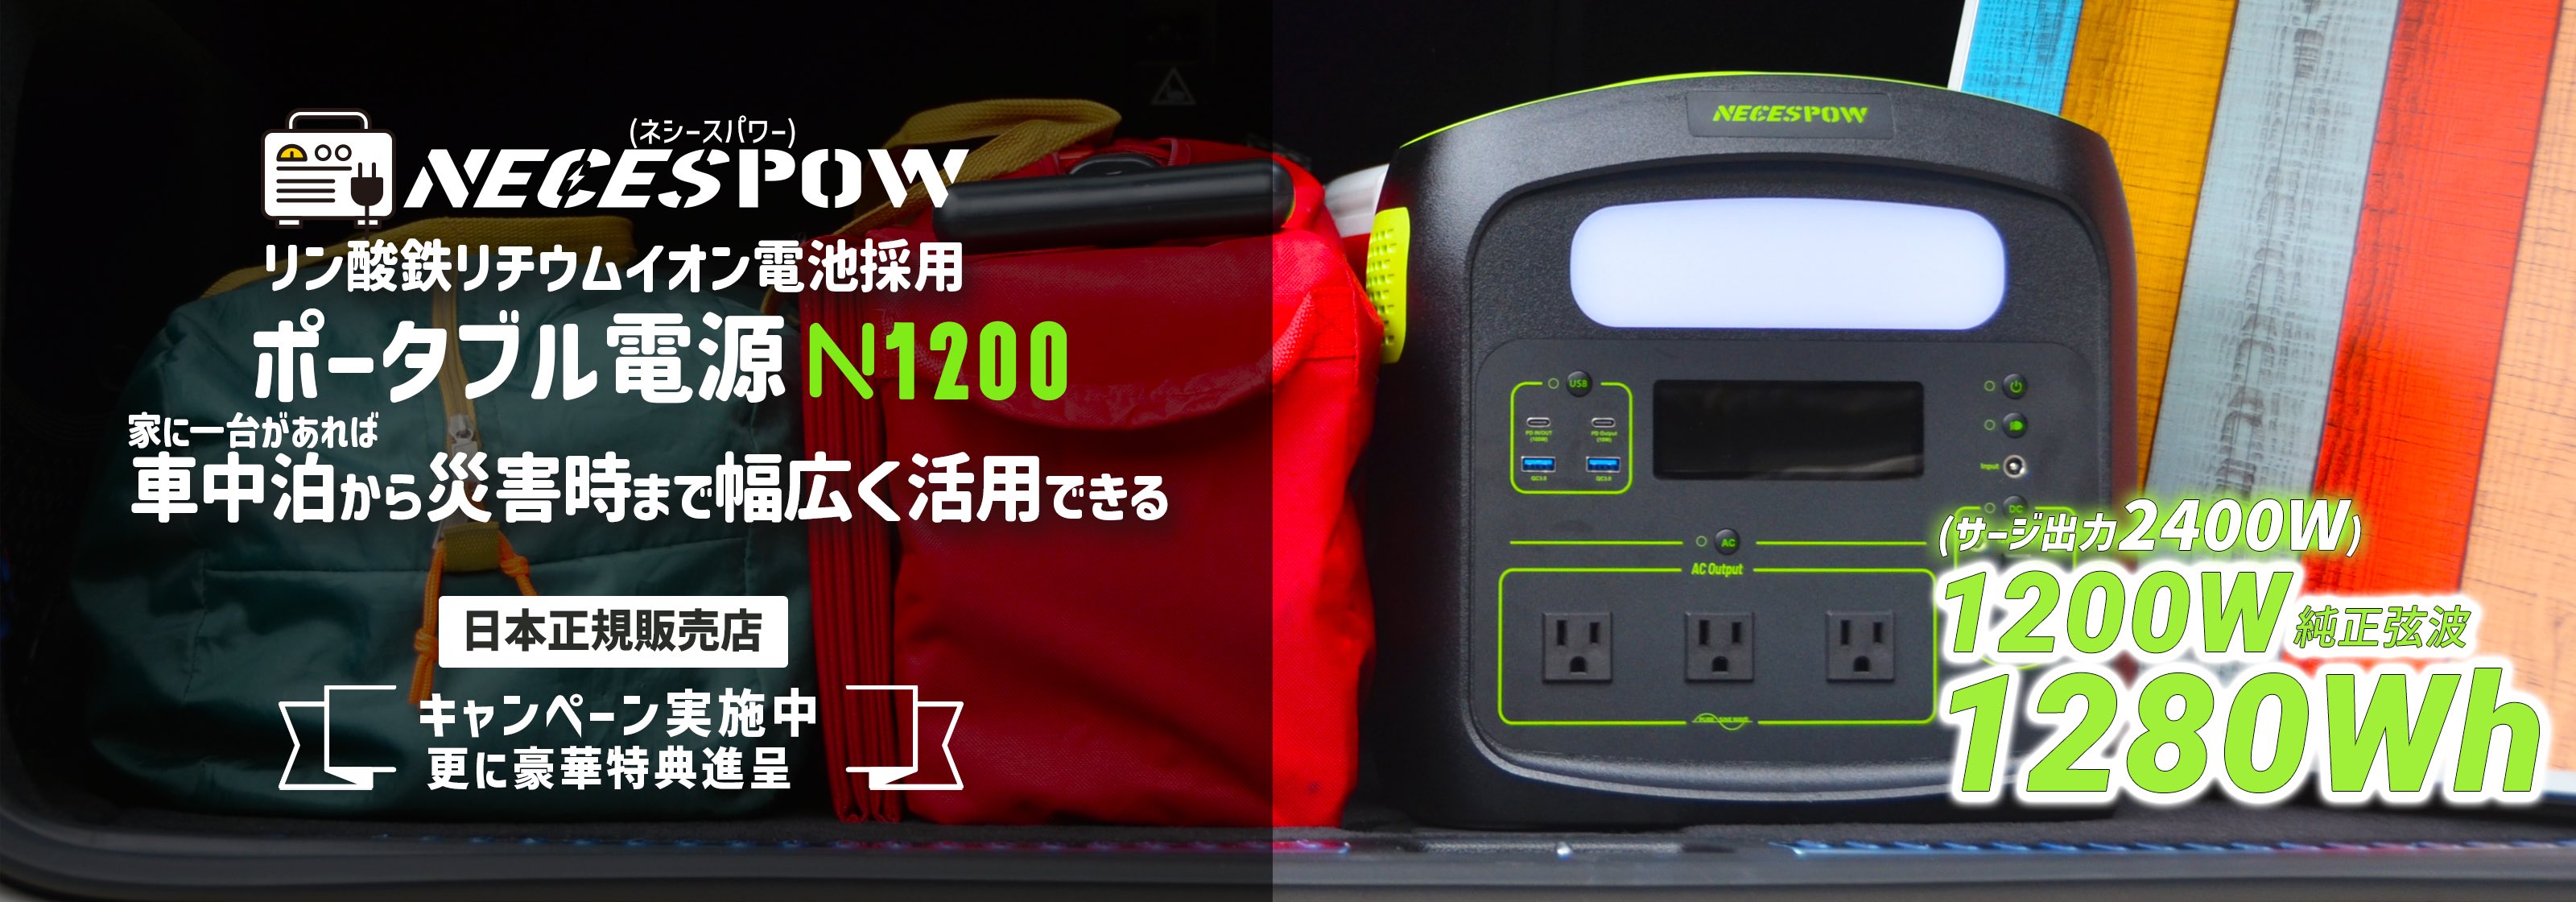 NECESPOW N1200 ポータブル電源